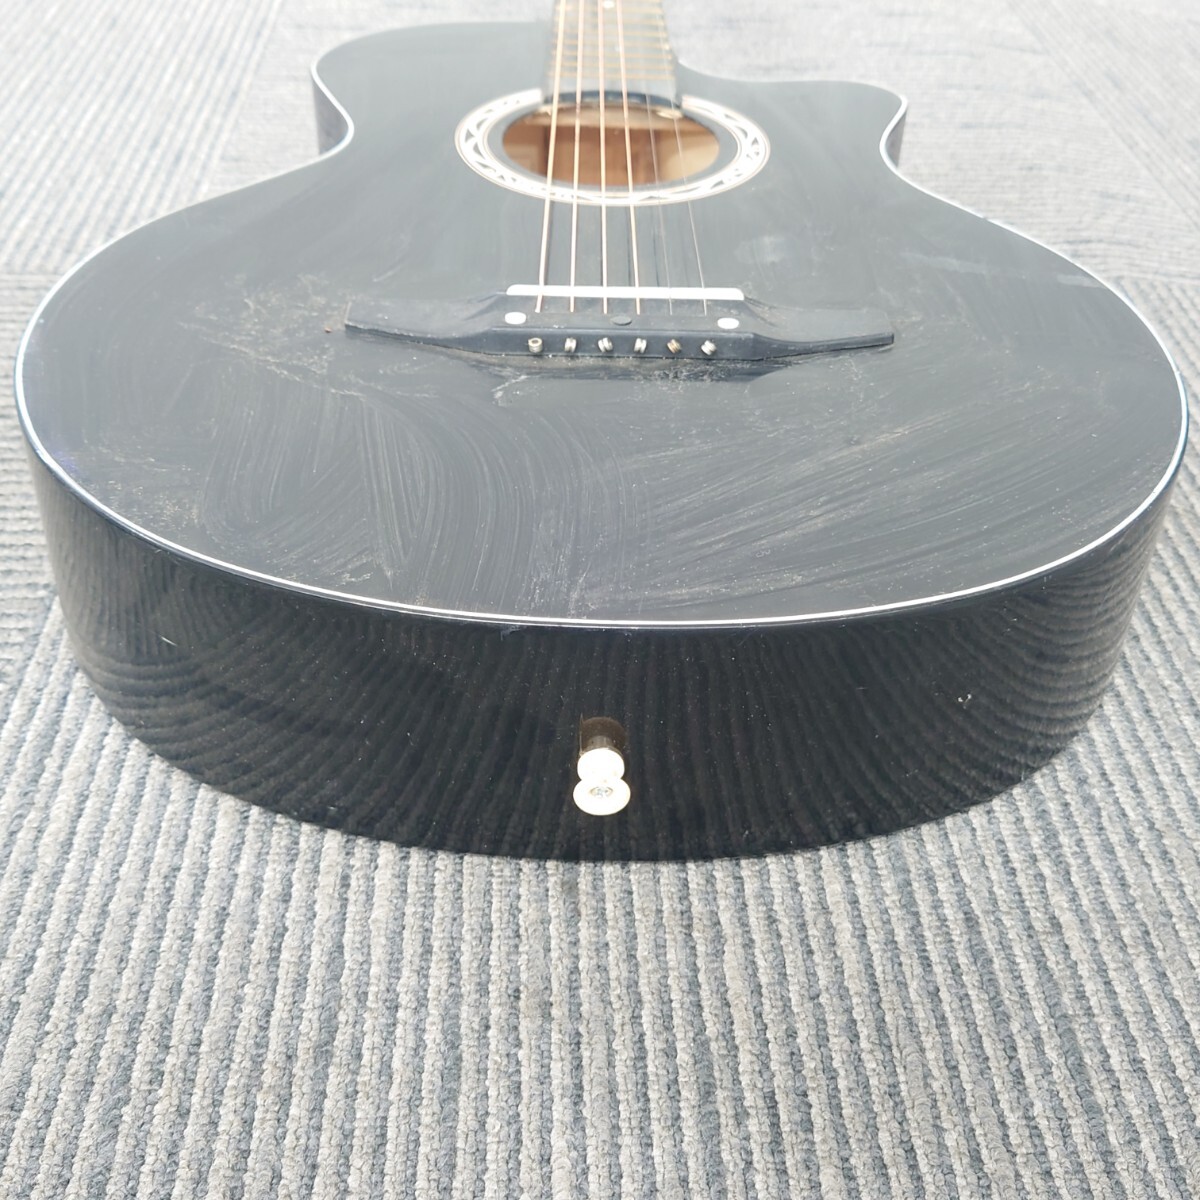 I995 ギター アコースティックギター COWBOY MODEL NO 3810 アコギ 楽器 弦楽器 中古 ジャンク品 訳ありの画像10